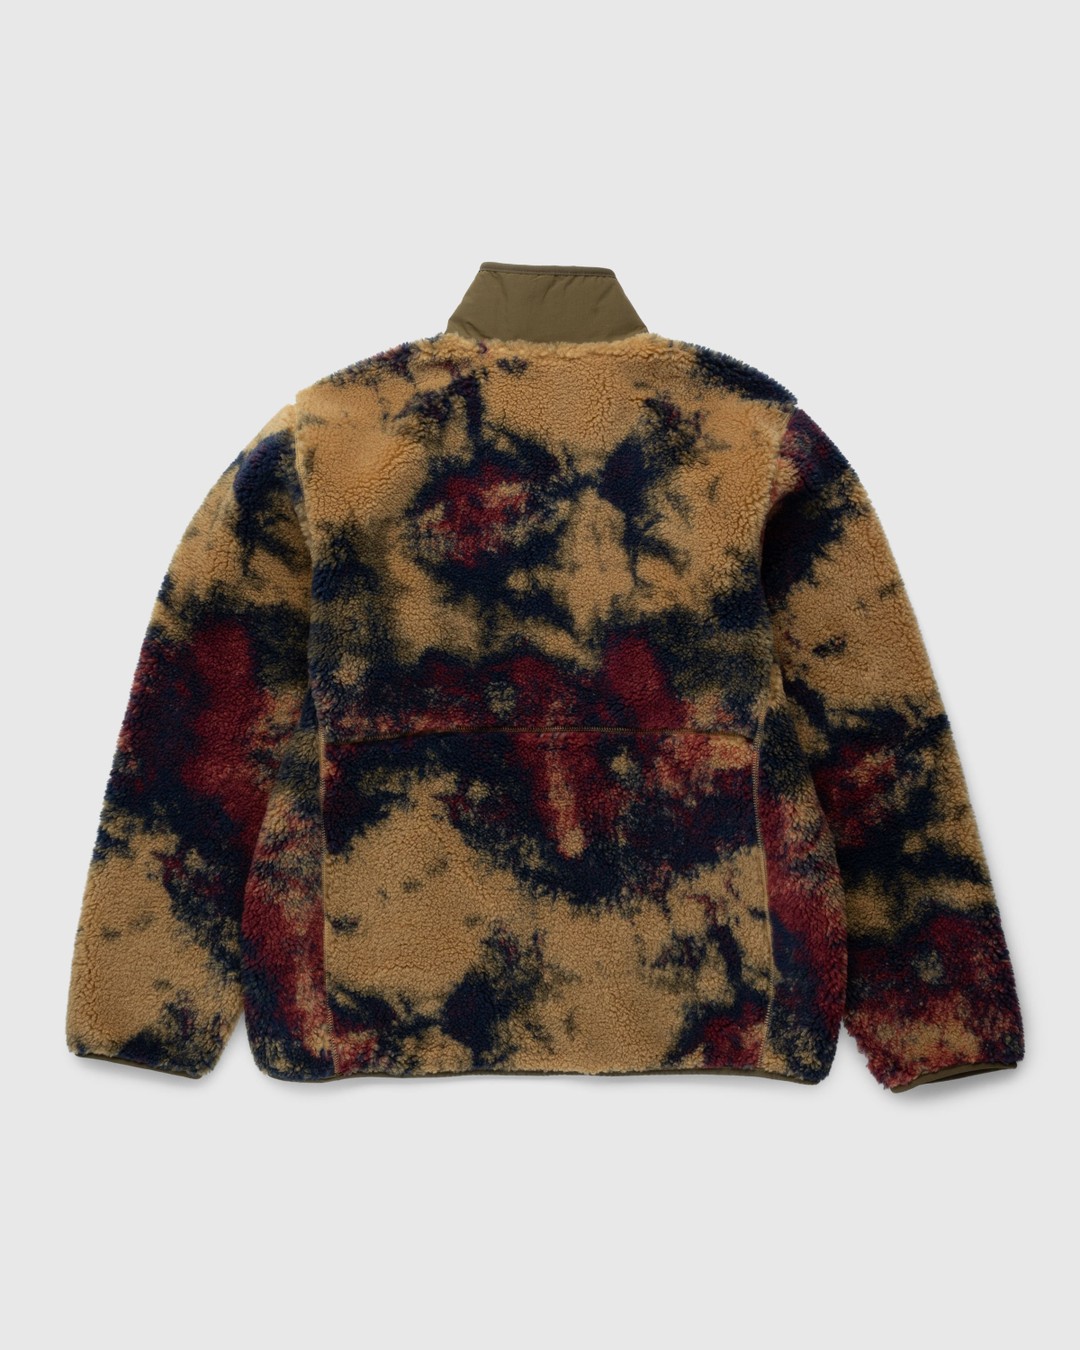 The North Face – Jacquard Extreme Pile Full-Zip Jacket Antelope Tan/Ice Dye  Print | Highsnobiety Shop